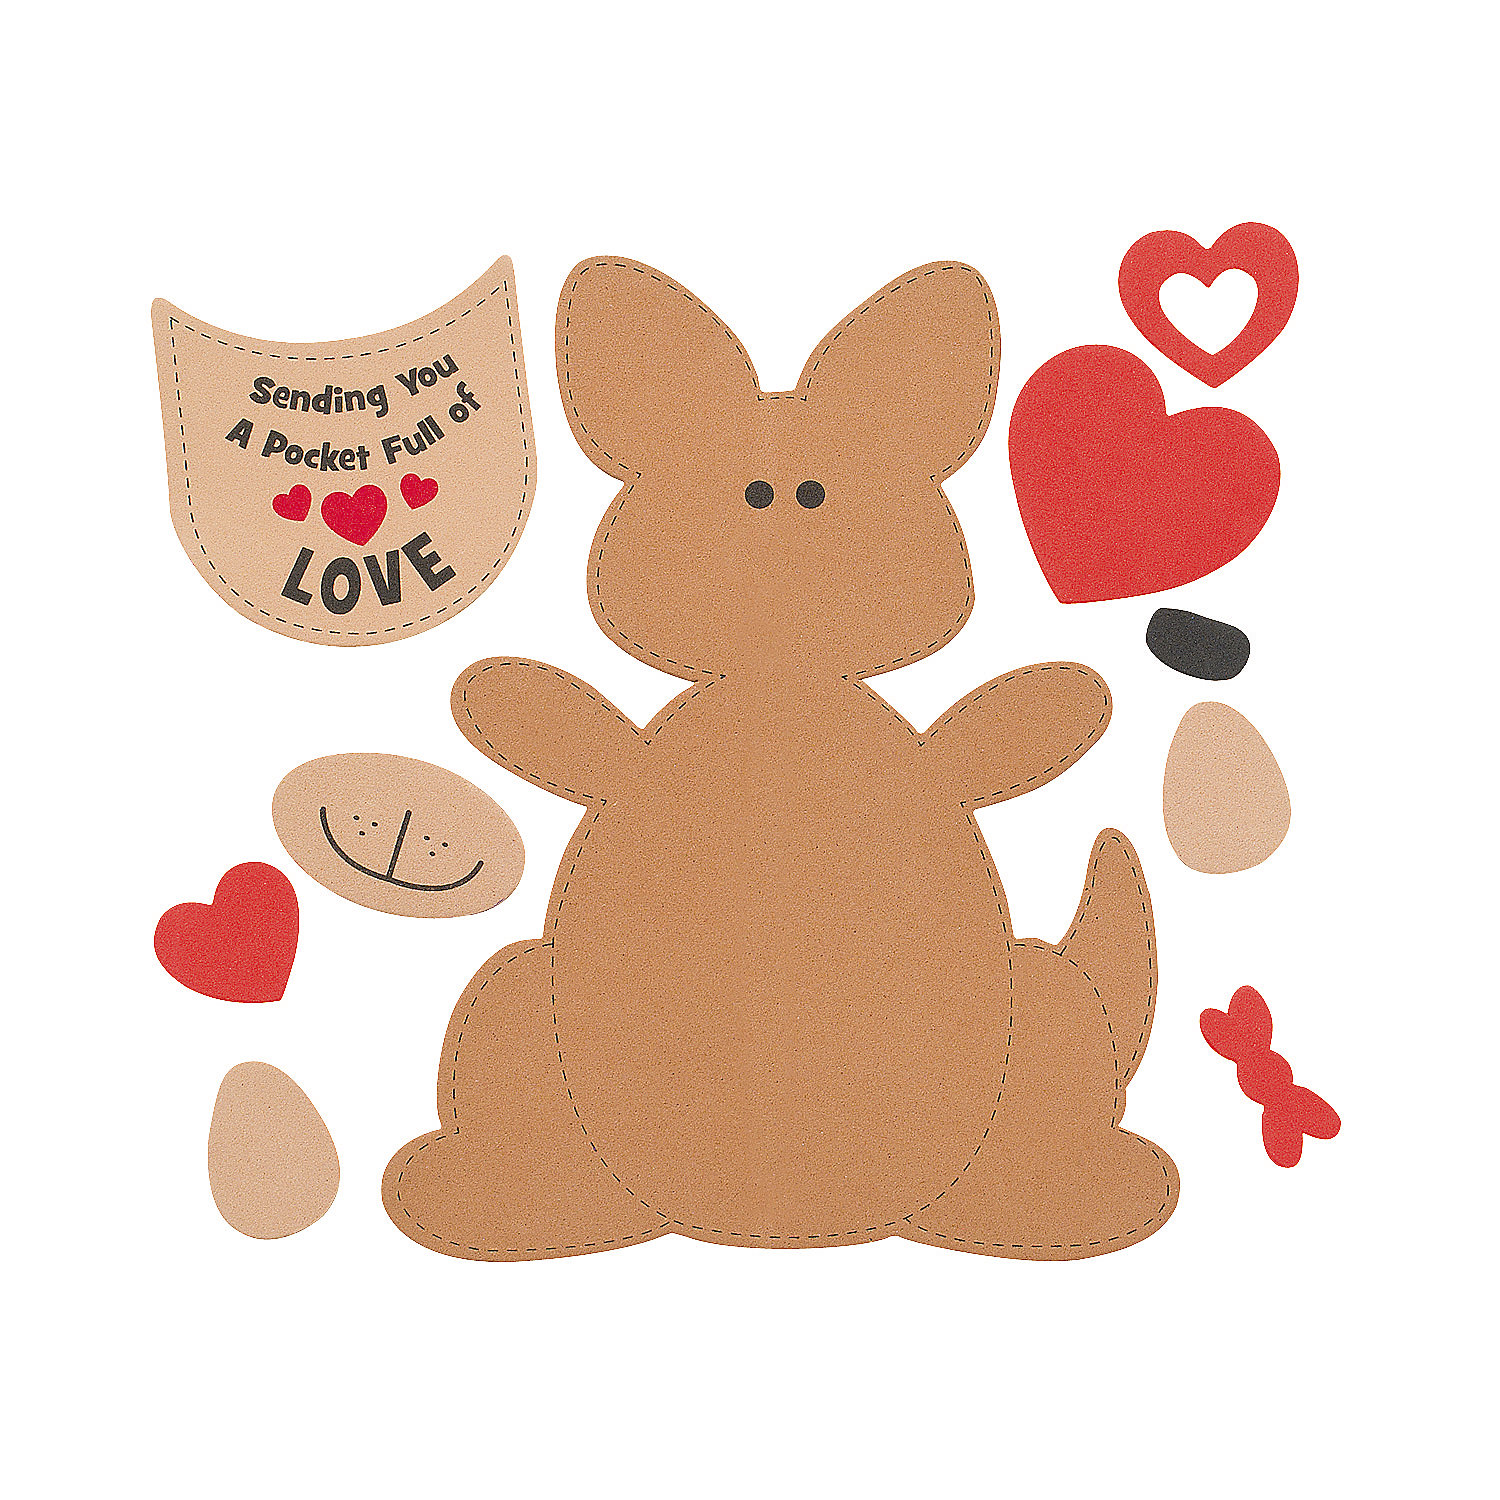 Pocket Full of Love Kangaroo Valentine Craft Kit1500 x 1500